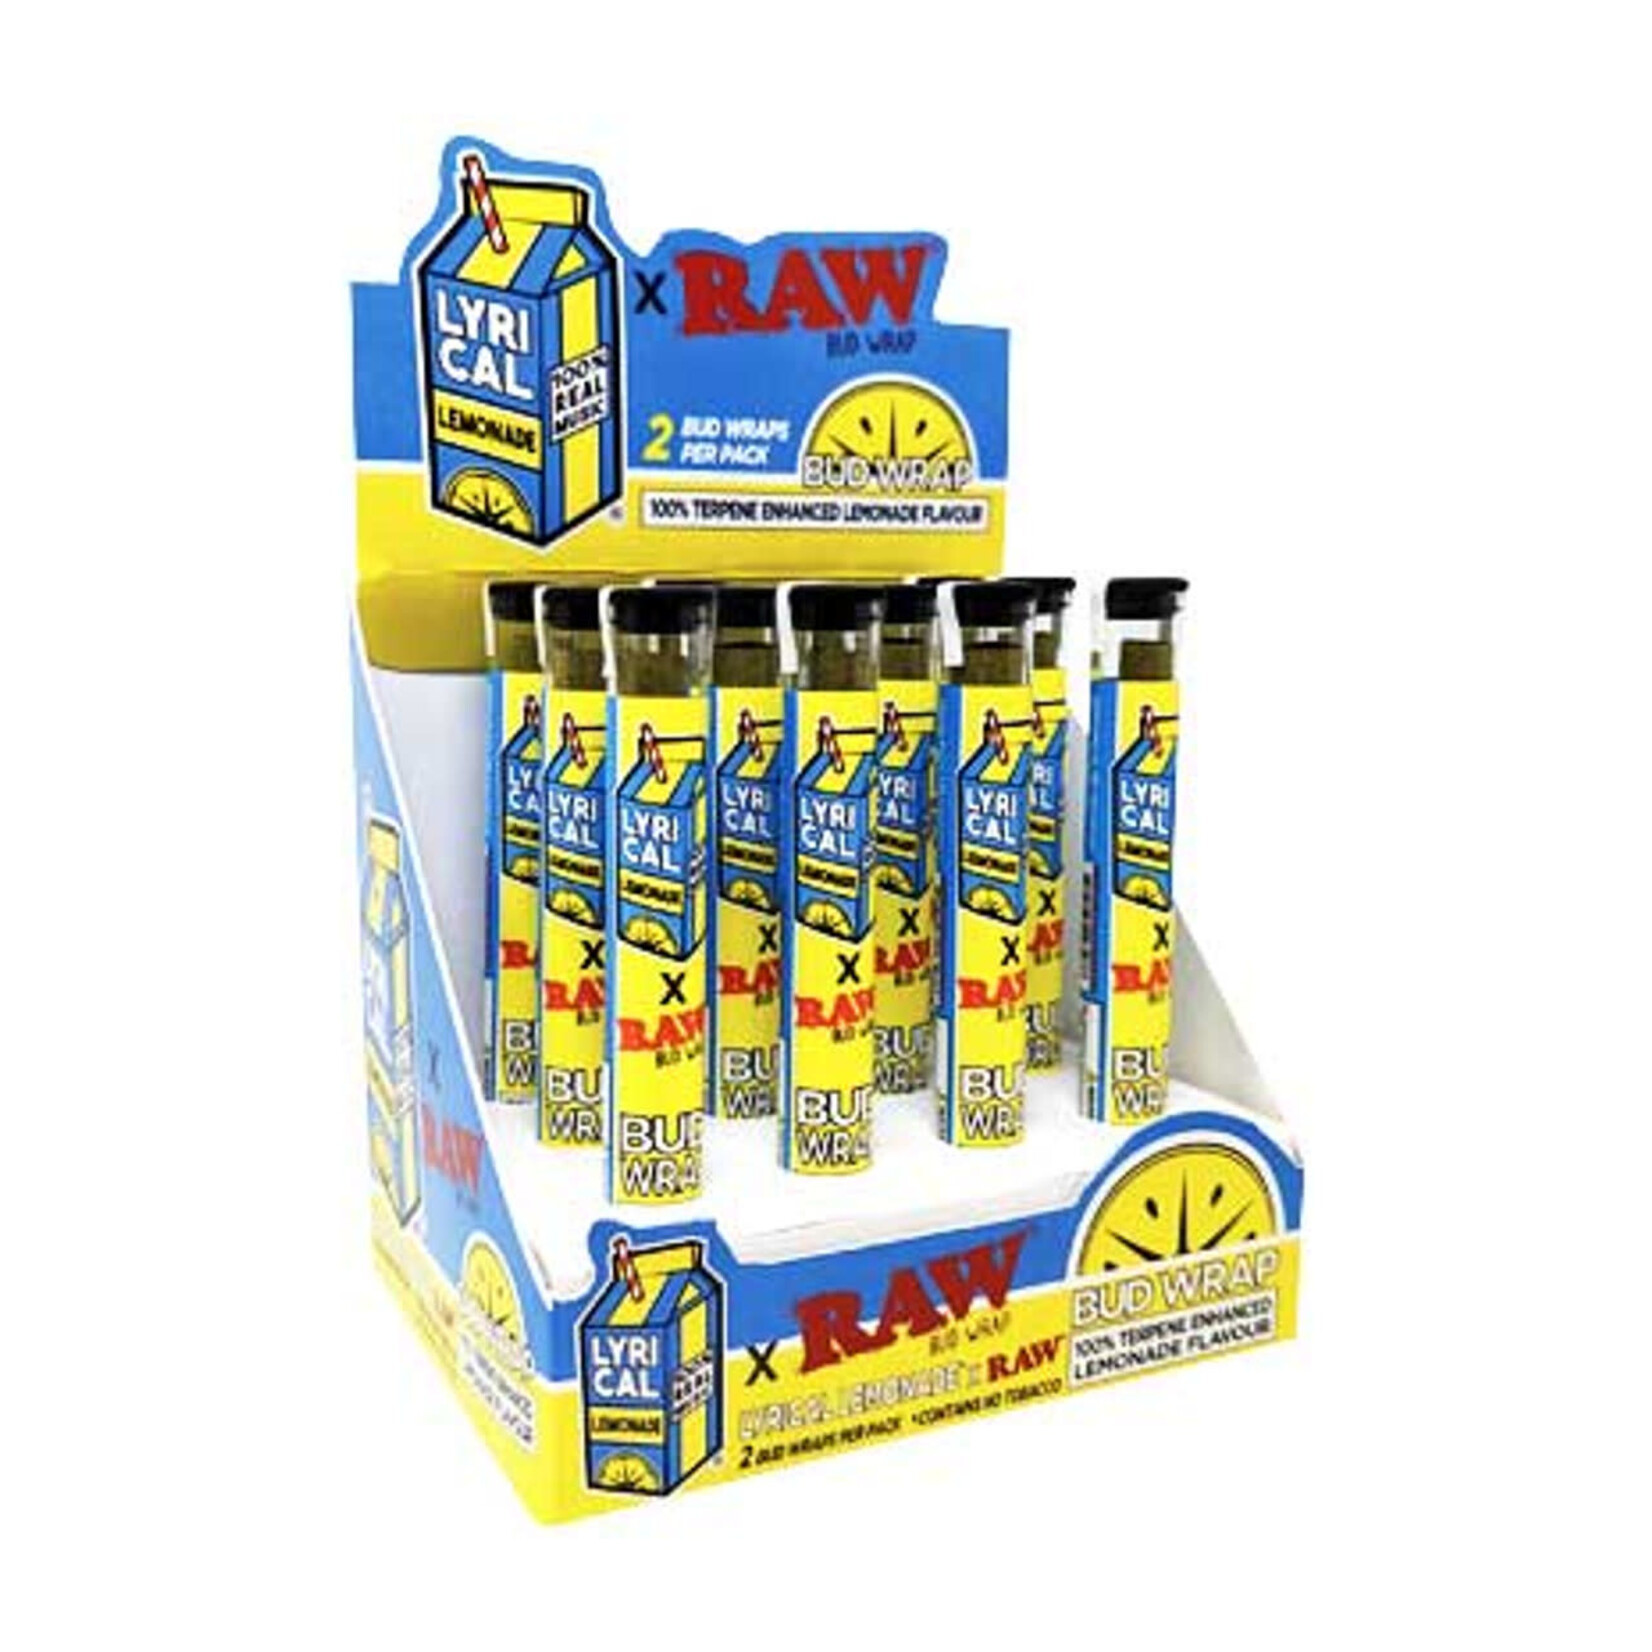 Raw® RAW® - Bud Wrap Terpene Infused Cones